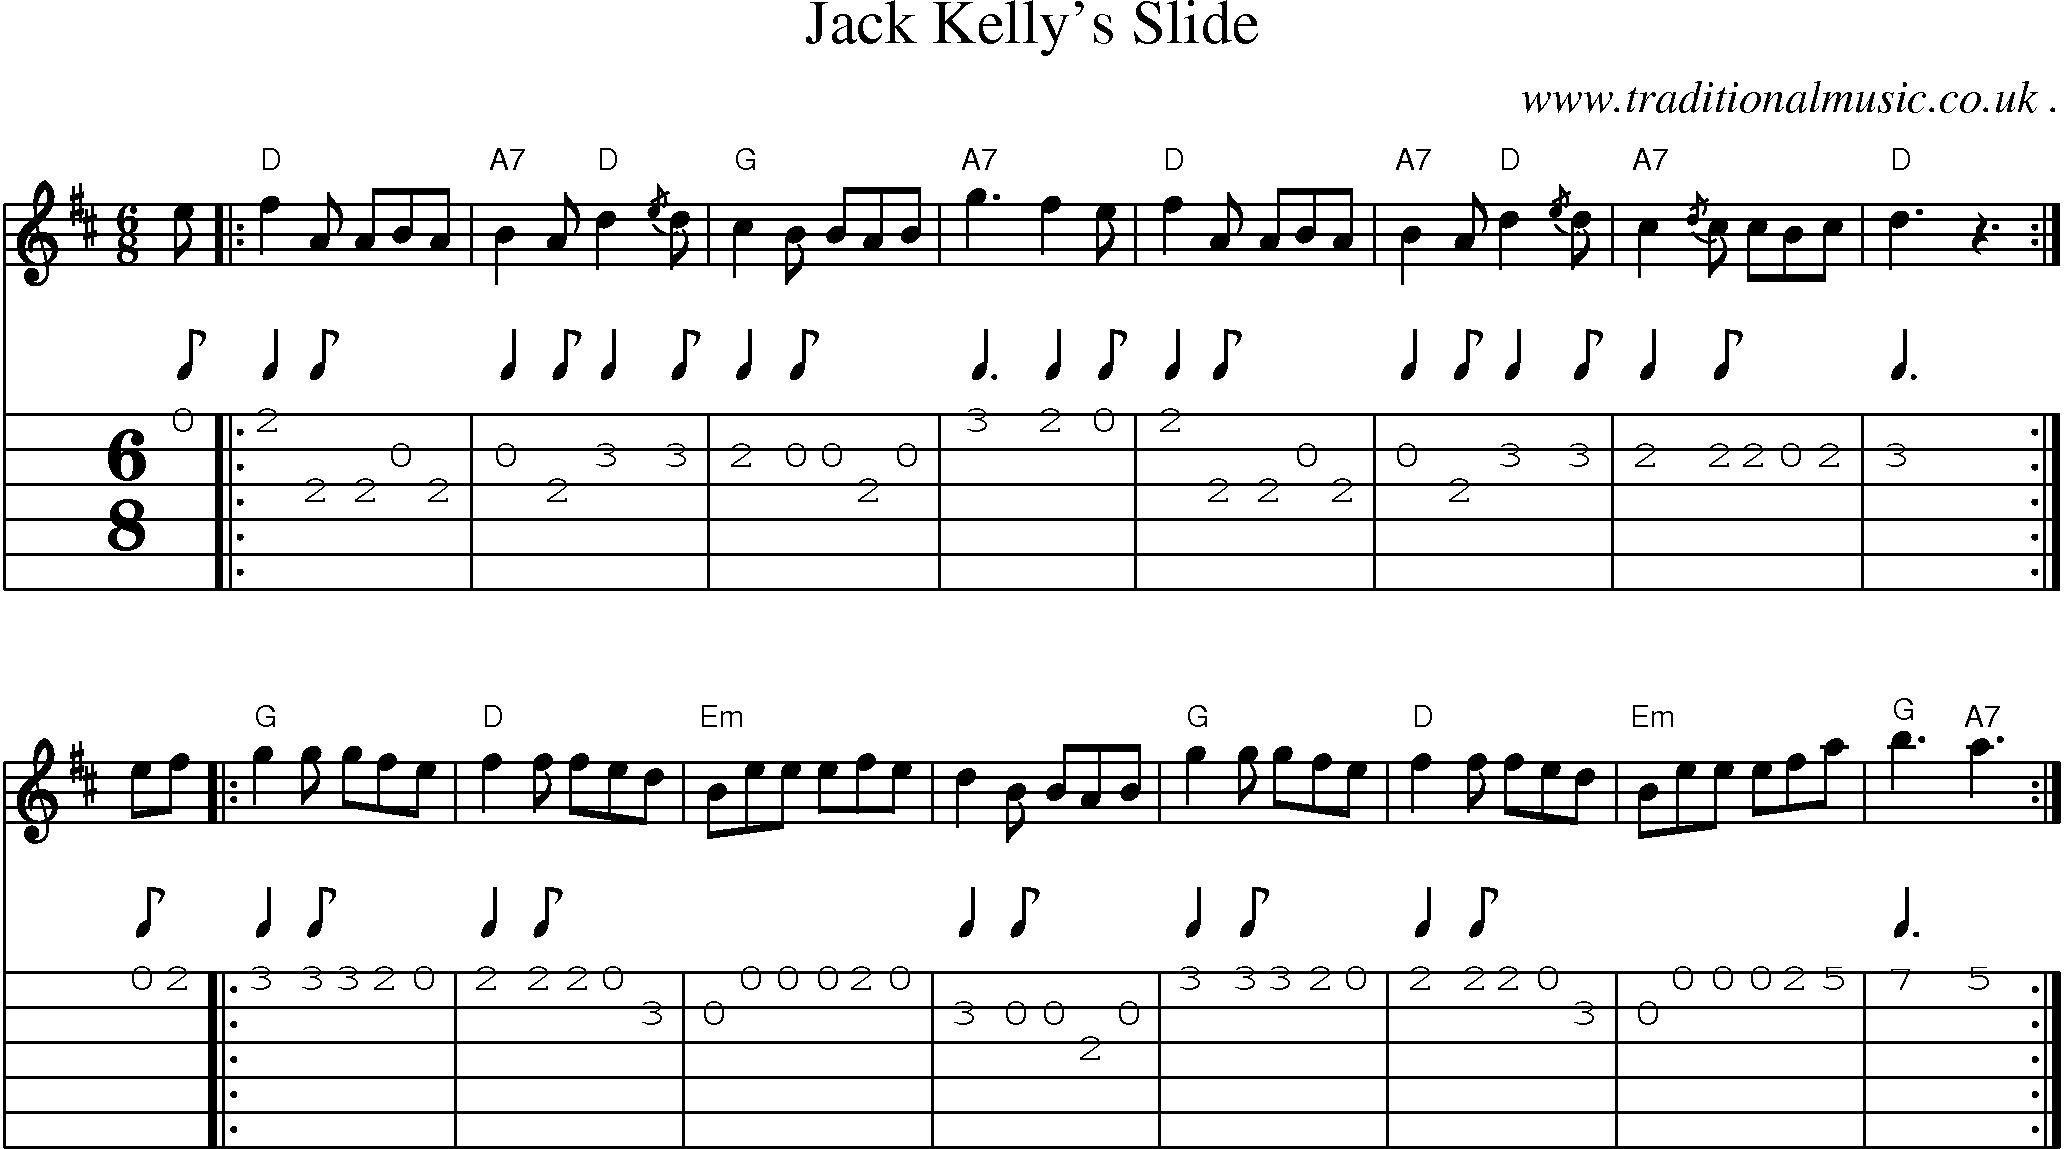 Sheet-music  score, Chords and Guitar Tabs for Jack Kellys Slide